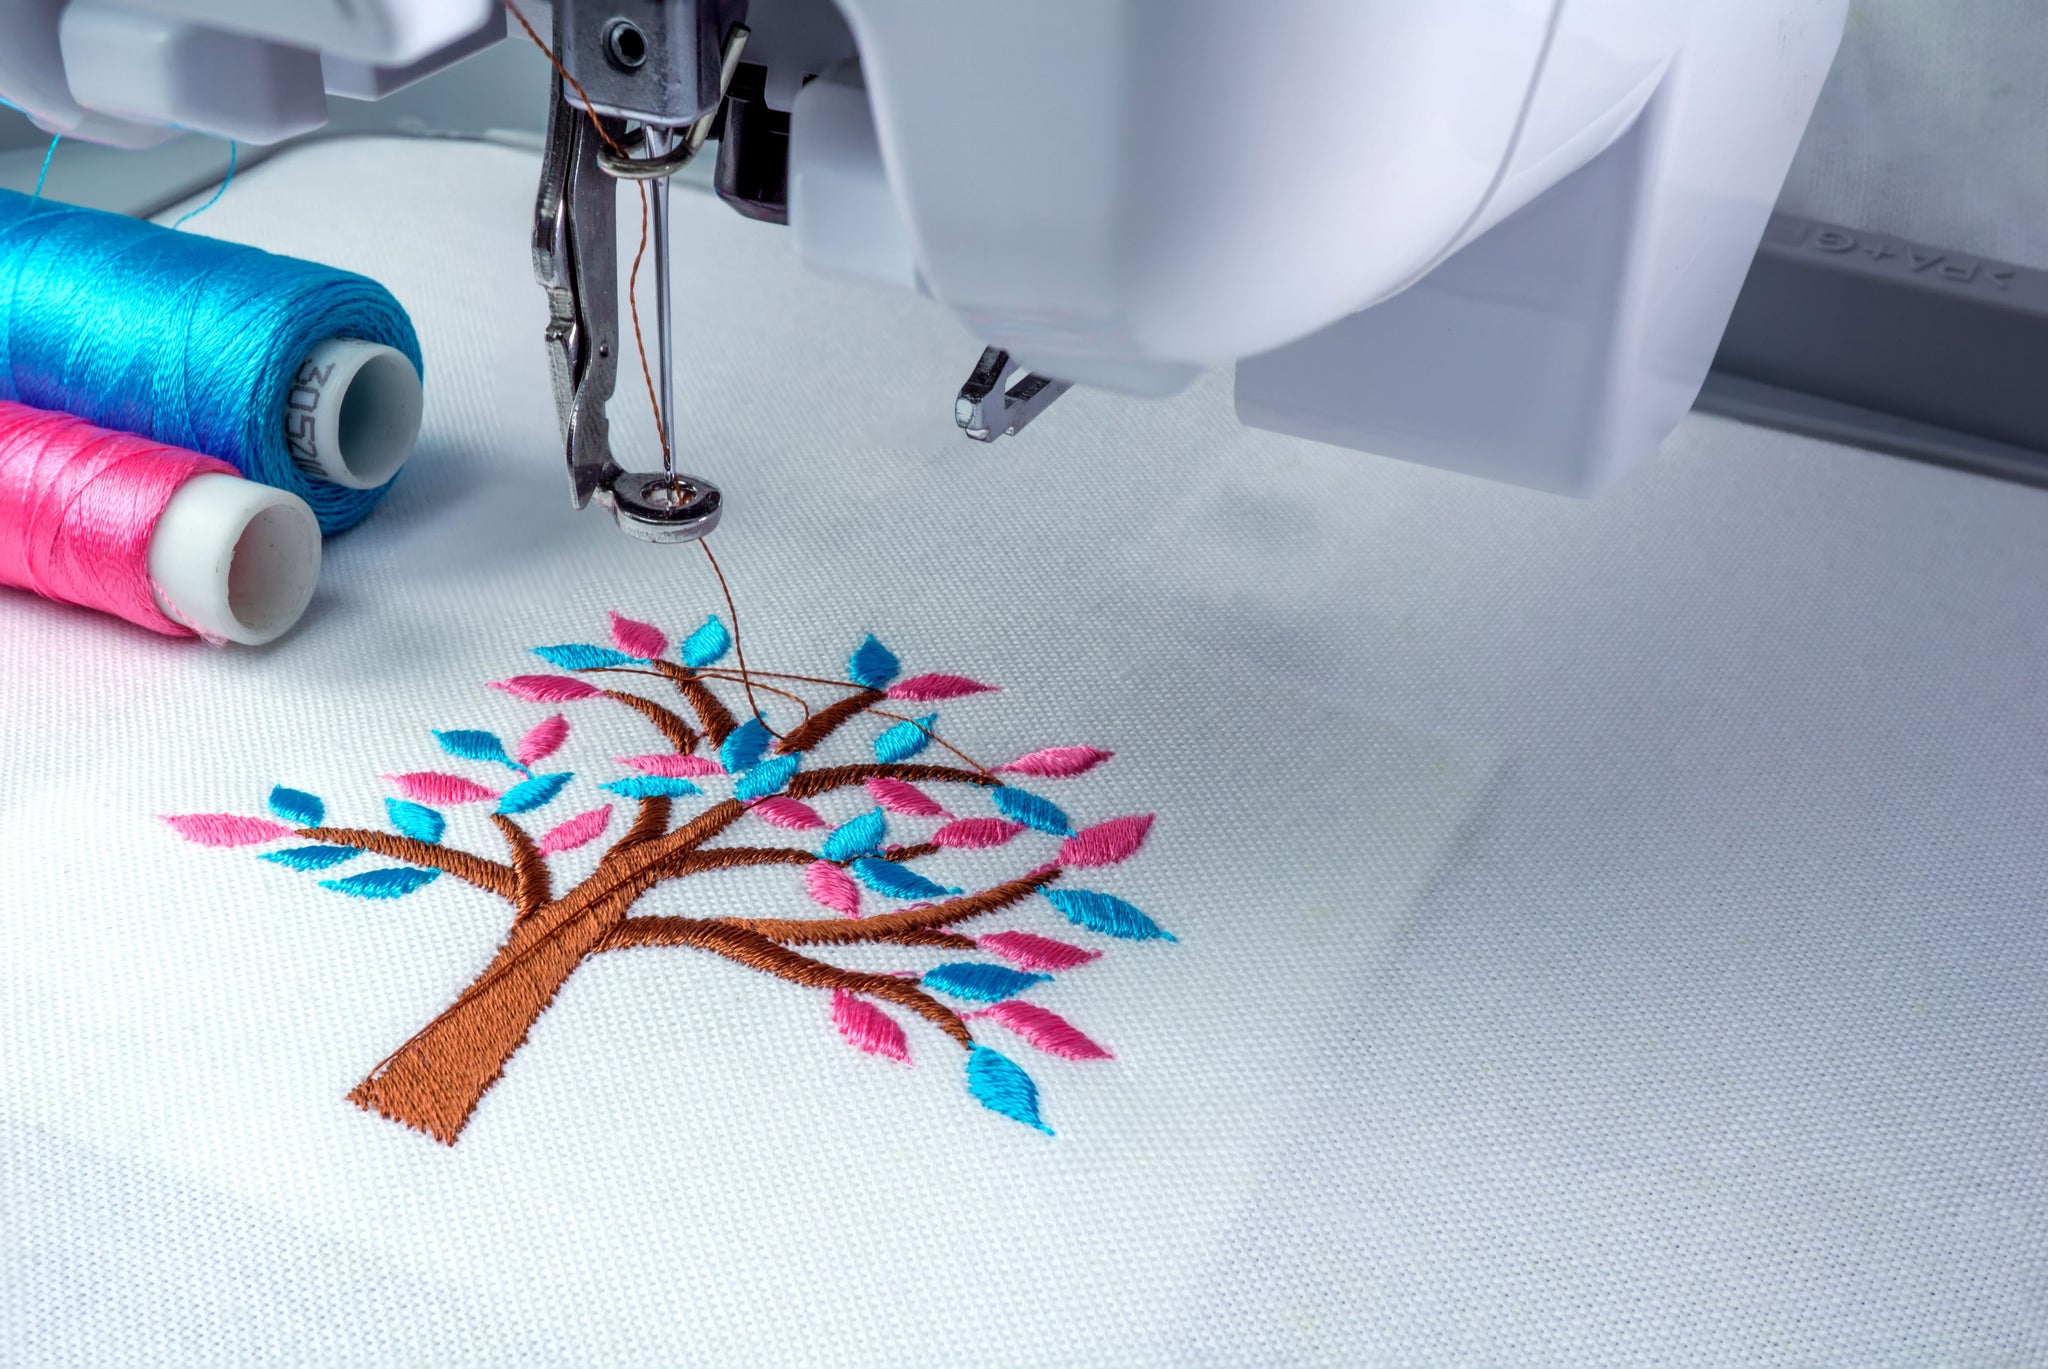 embroidery machine show embroider tree design - LMI Textiles